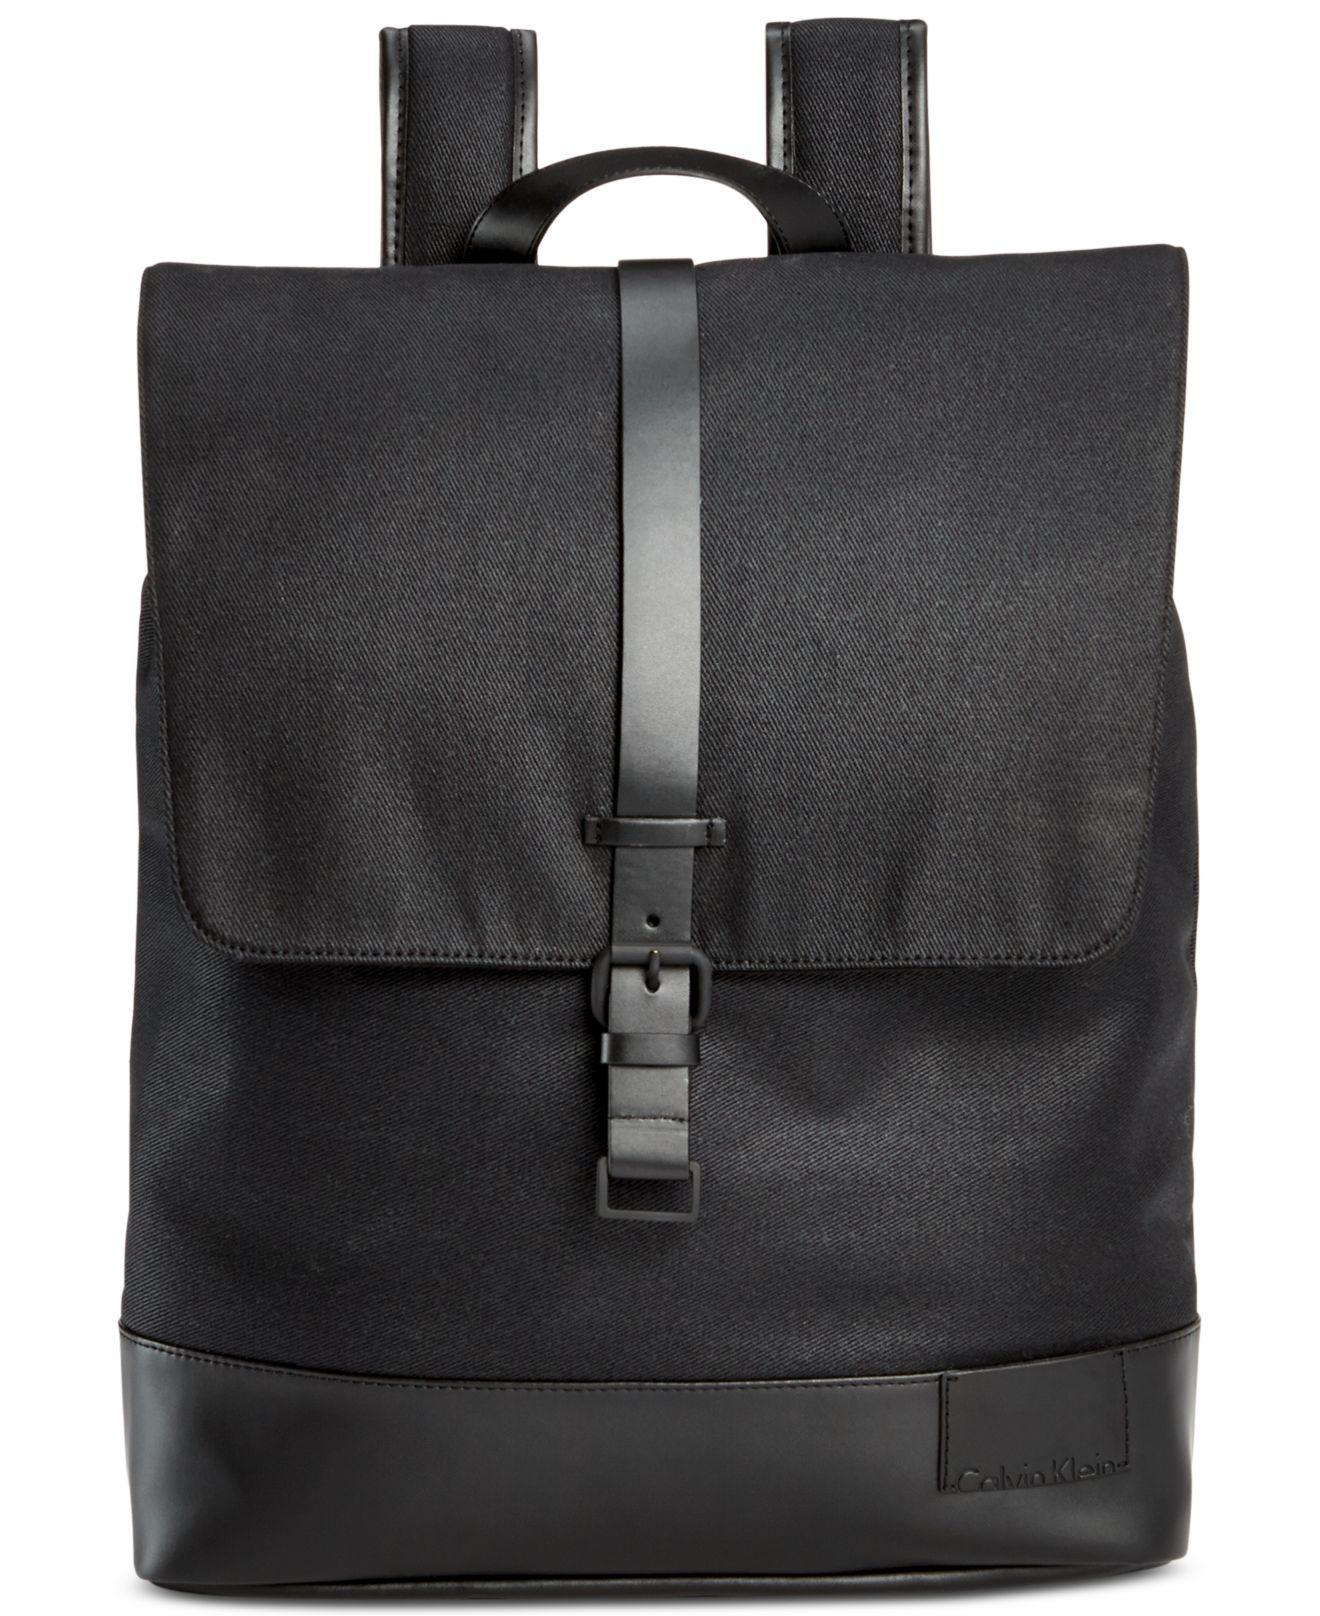 Lyst - Calvin Klein Coated Canvas Backpack in Black for Men